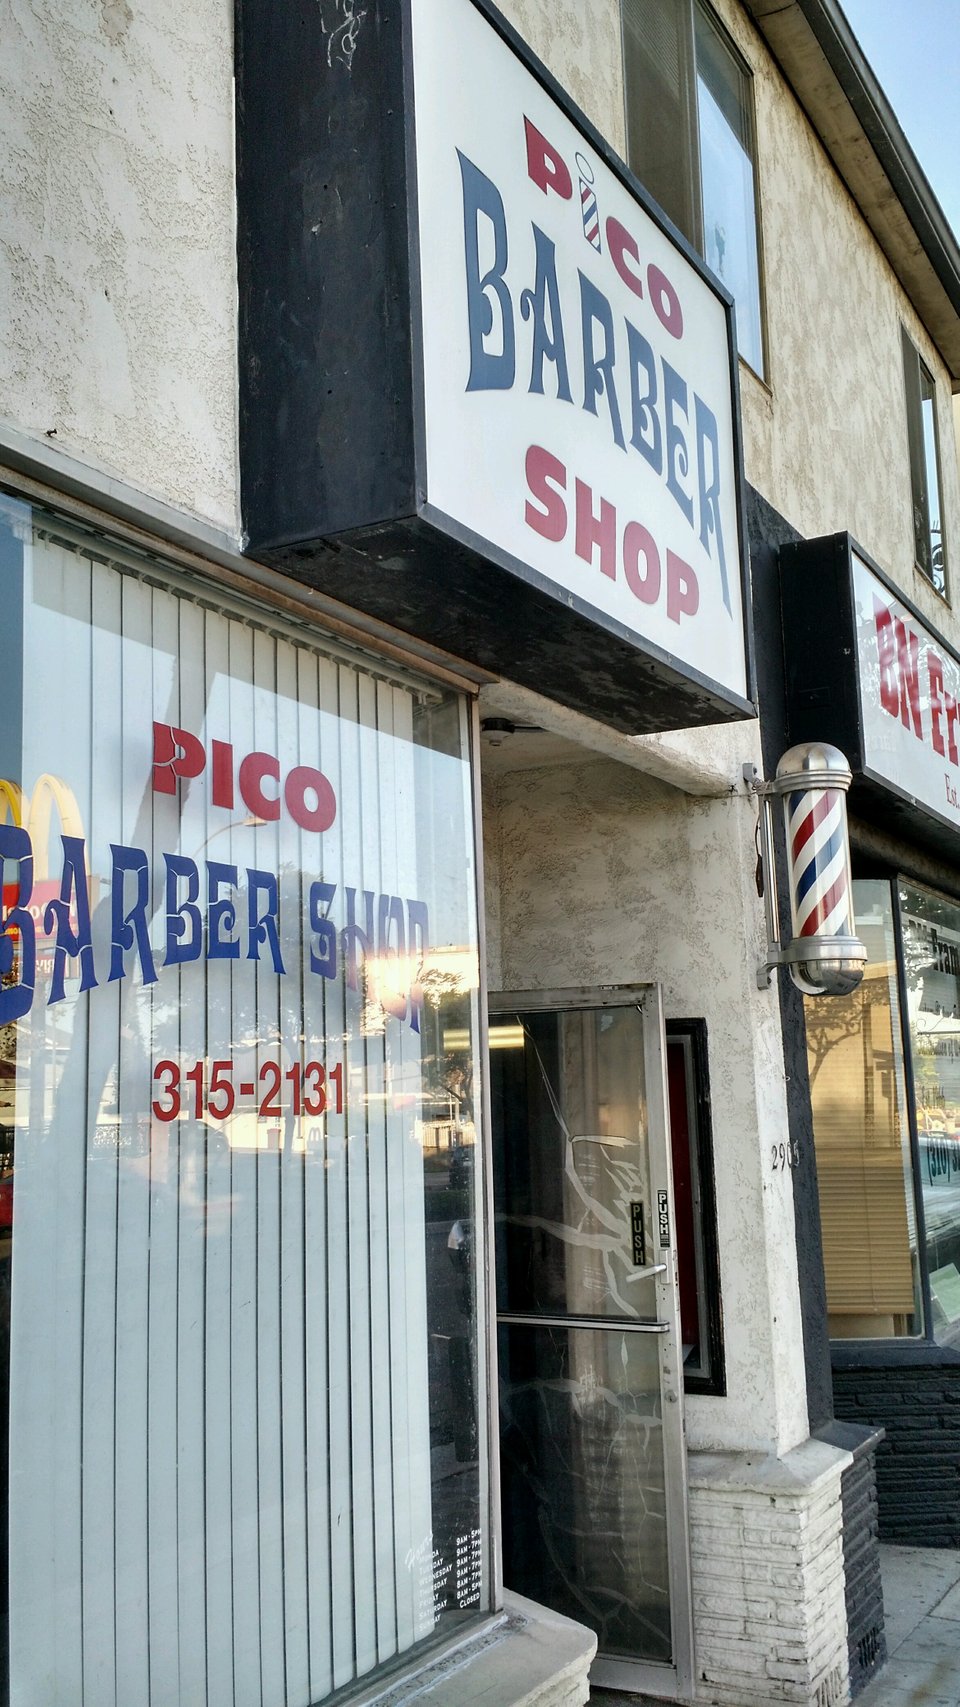 Pico Barbershop